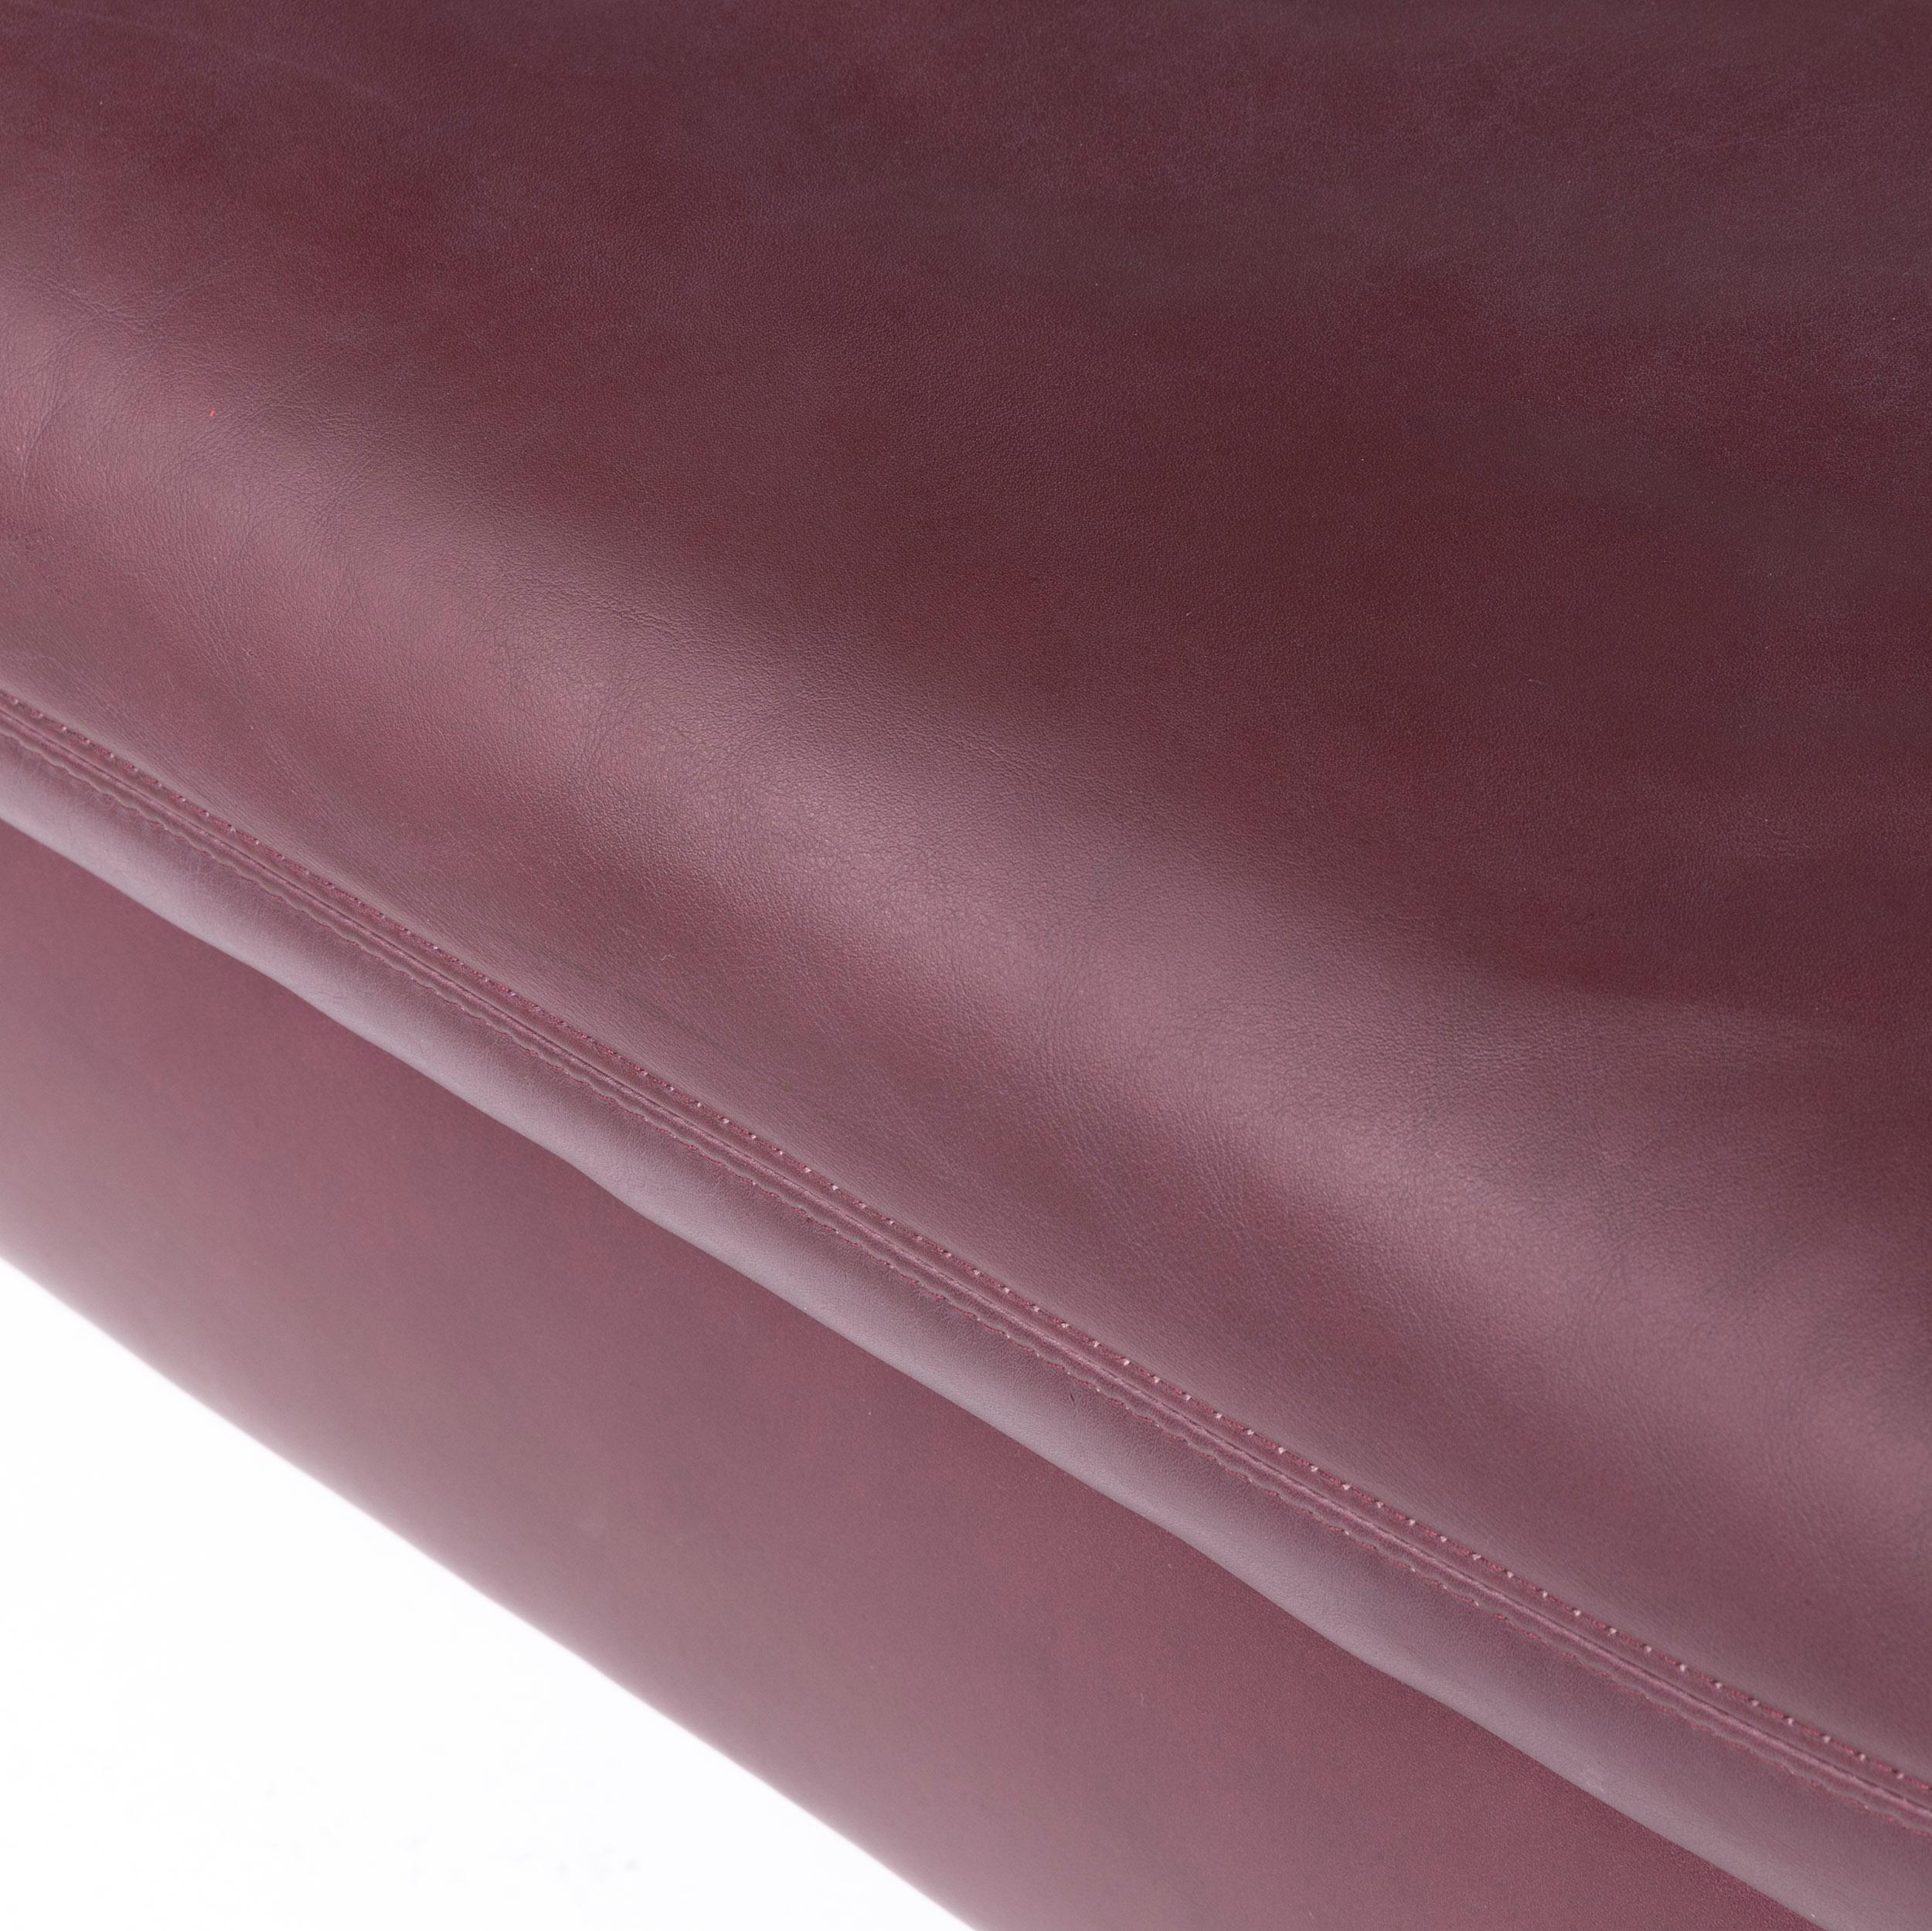 Contemporary Koinor Rivoli Designer Leather Sofa Purple Genuine Leather Two-Seat Couch For Sale